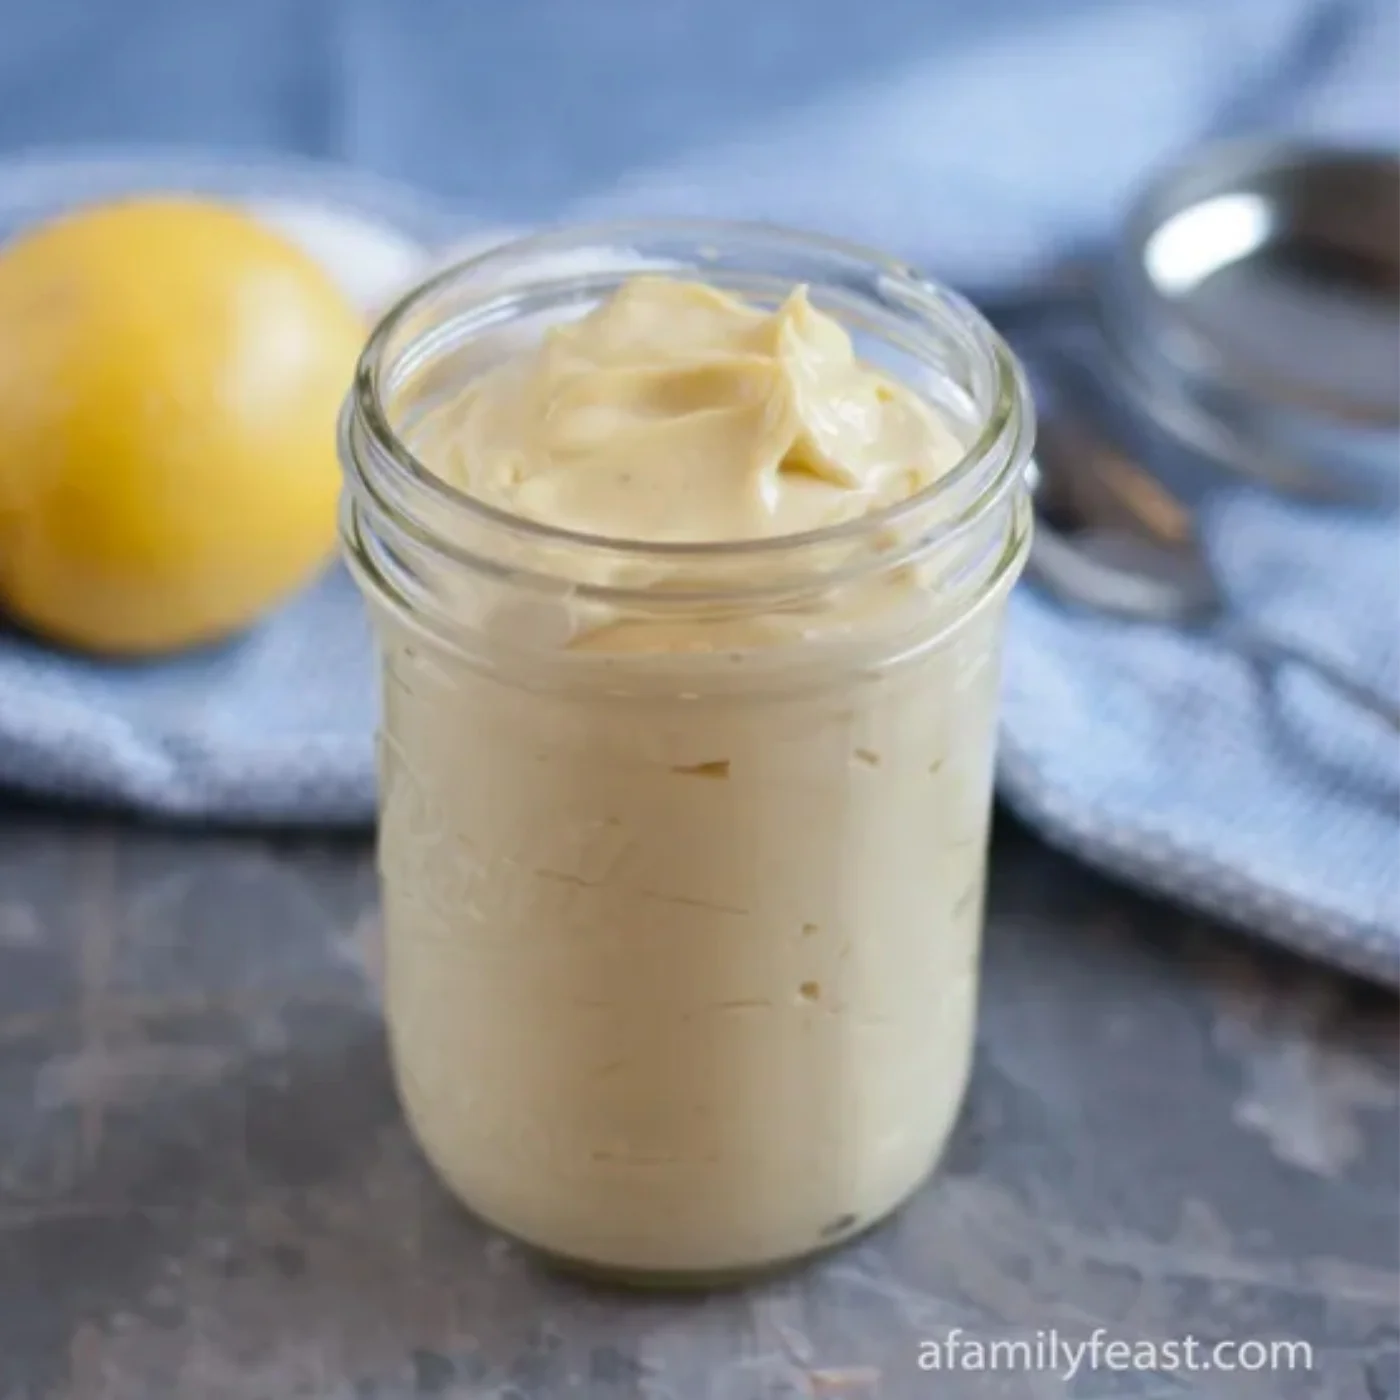  homemade mayonnaise in a jar